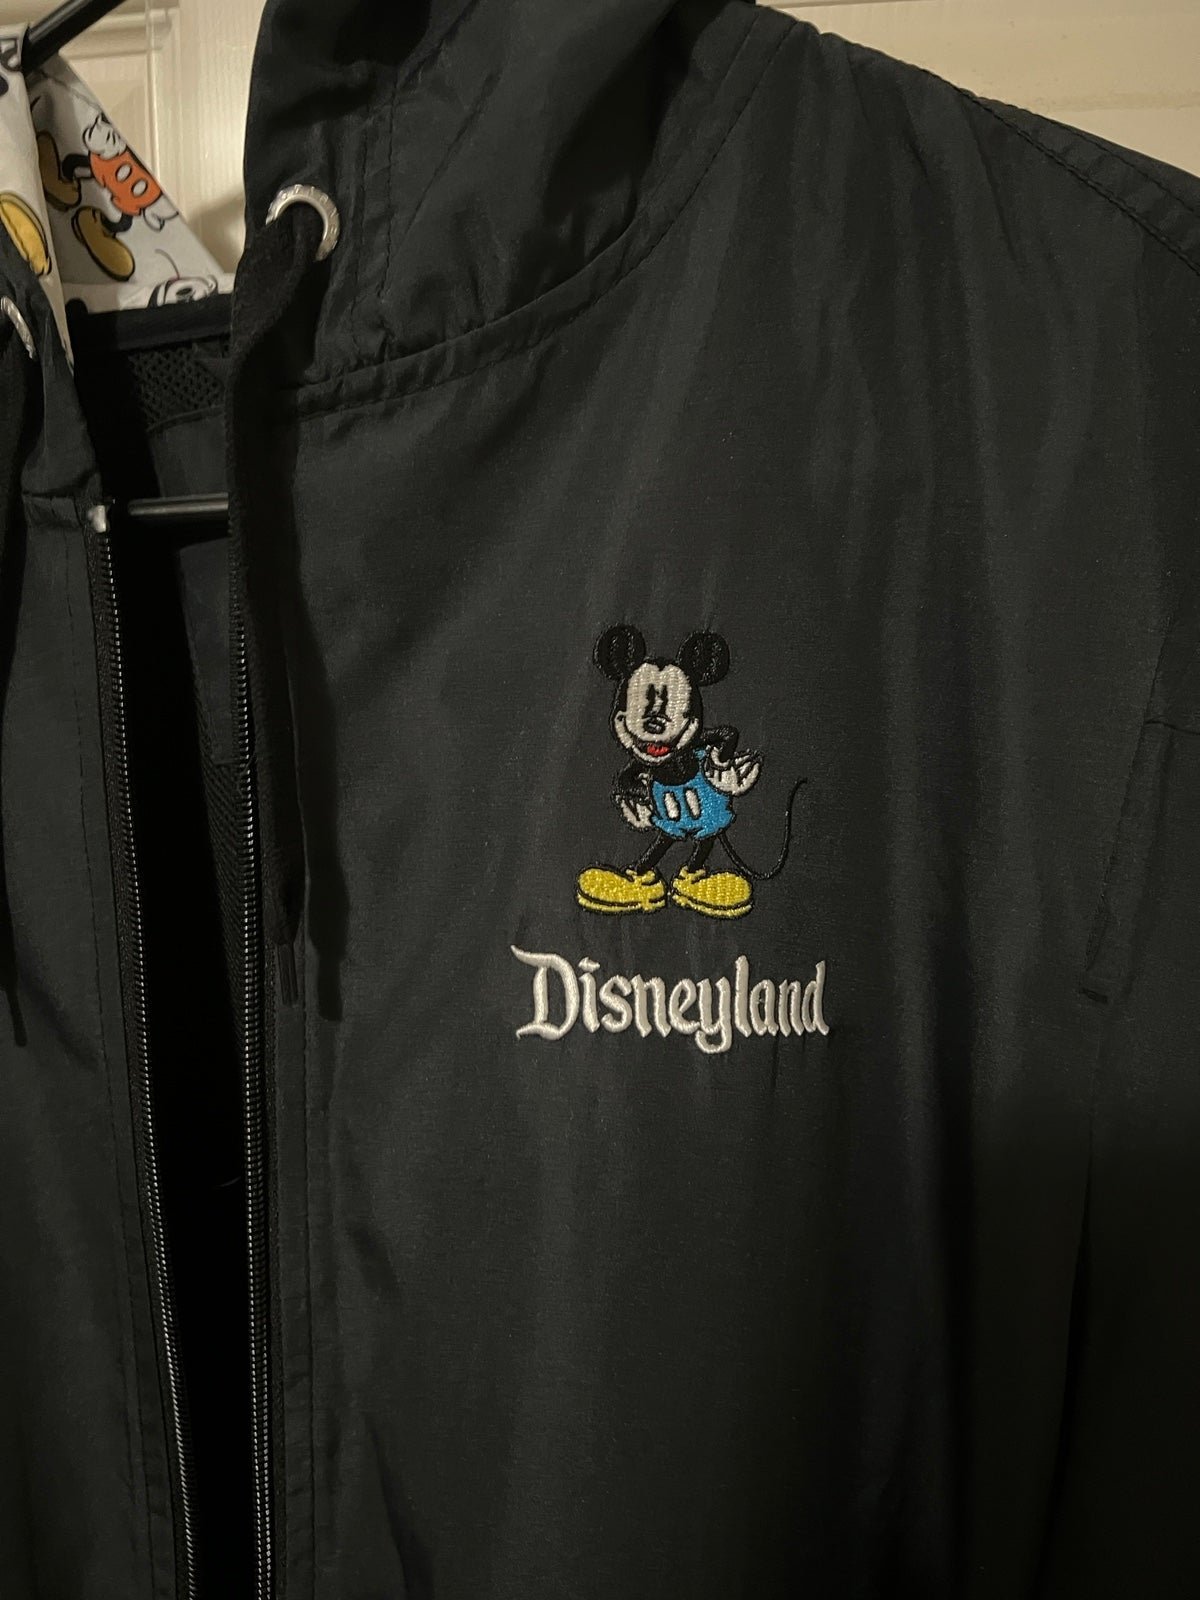 Simple Official Disneyland Park Mickey Mouse Windbreaker Jacket Size Large hZtEwvSxH just buy it